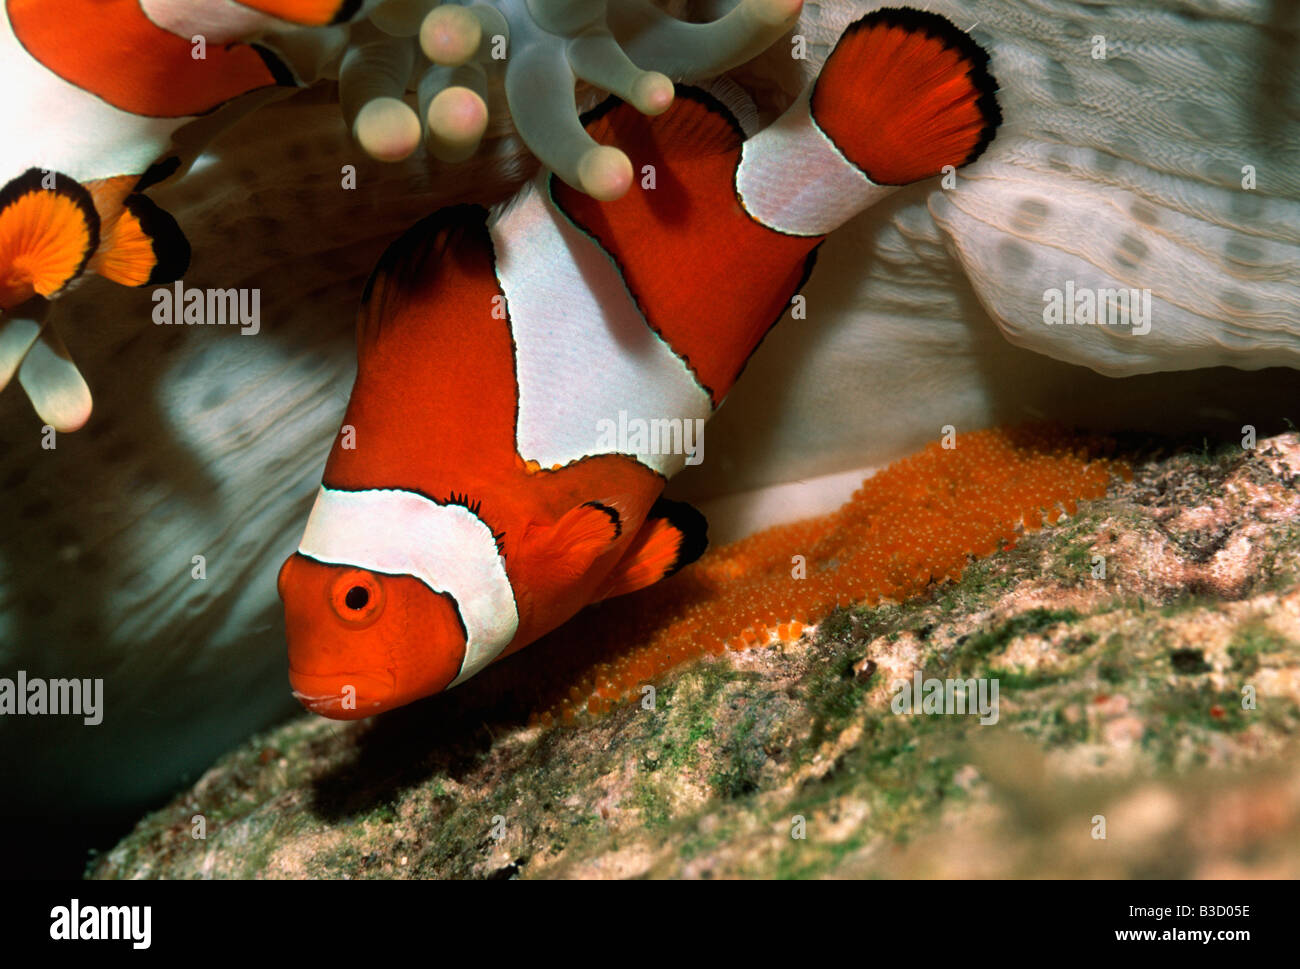 Western clown anemonefish Amphiprion ocellaris tendente uova deposte di fresco di Bunaken indonesia sulawesi Foto Stock